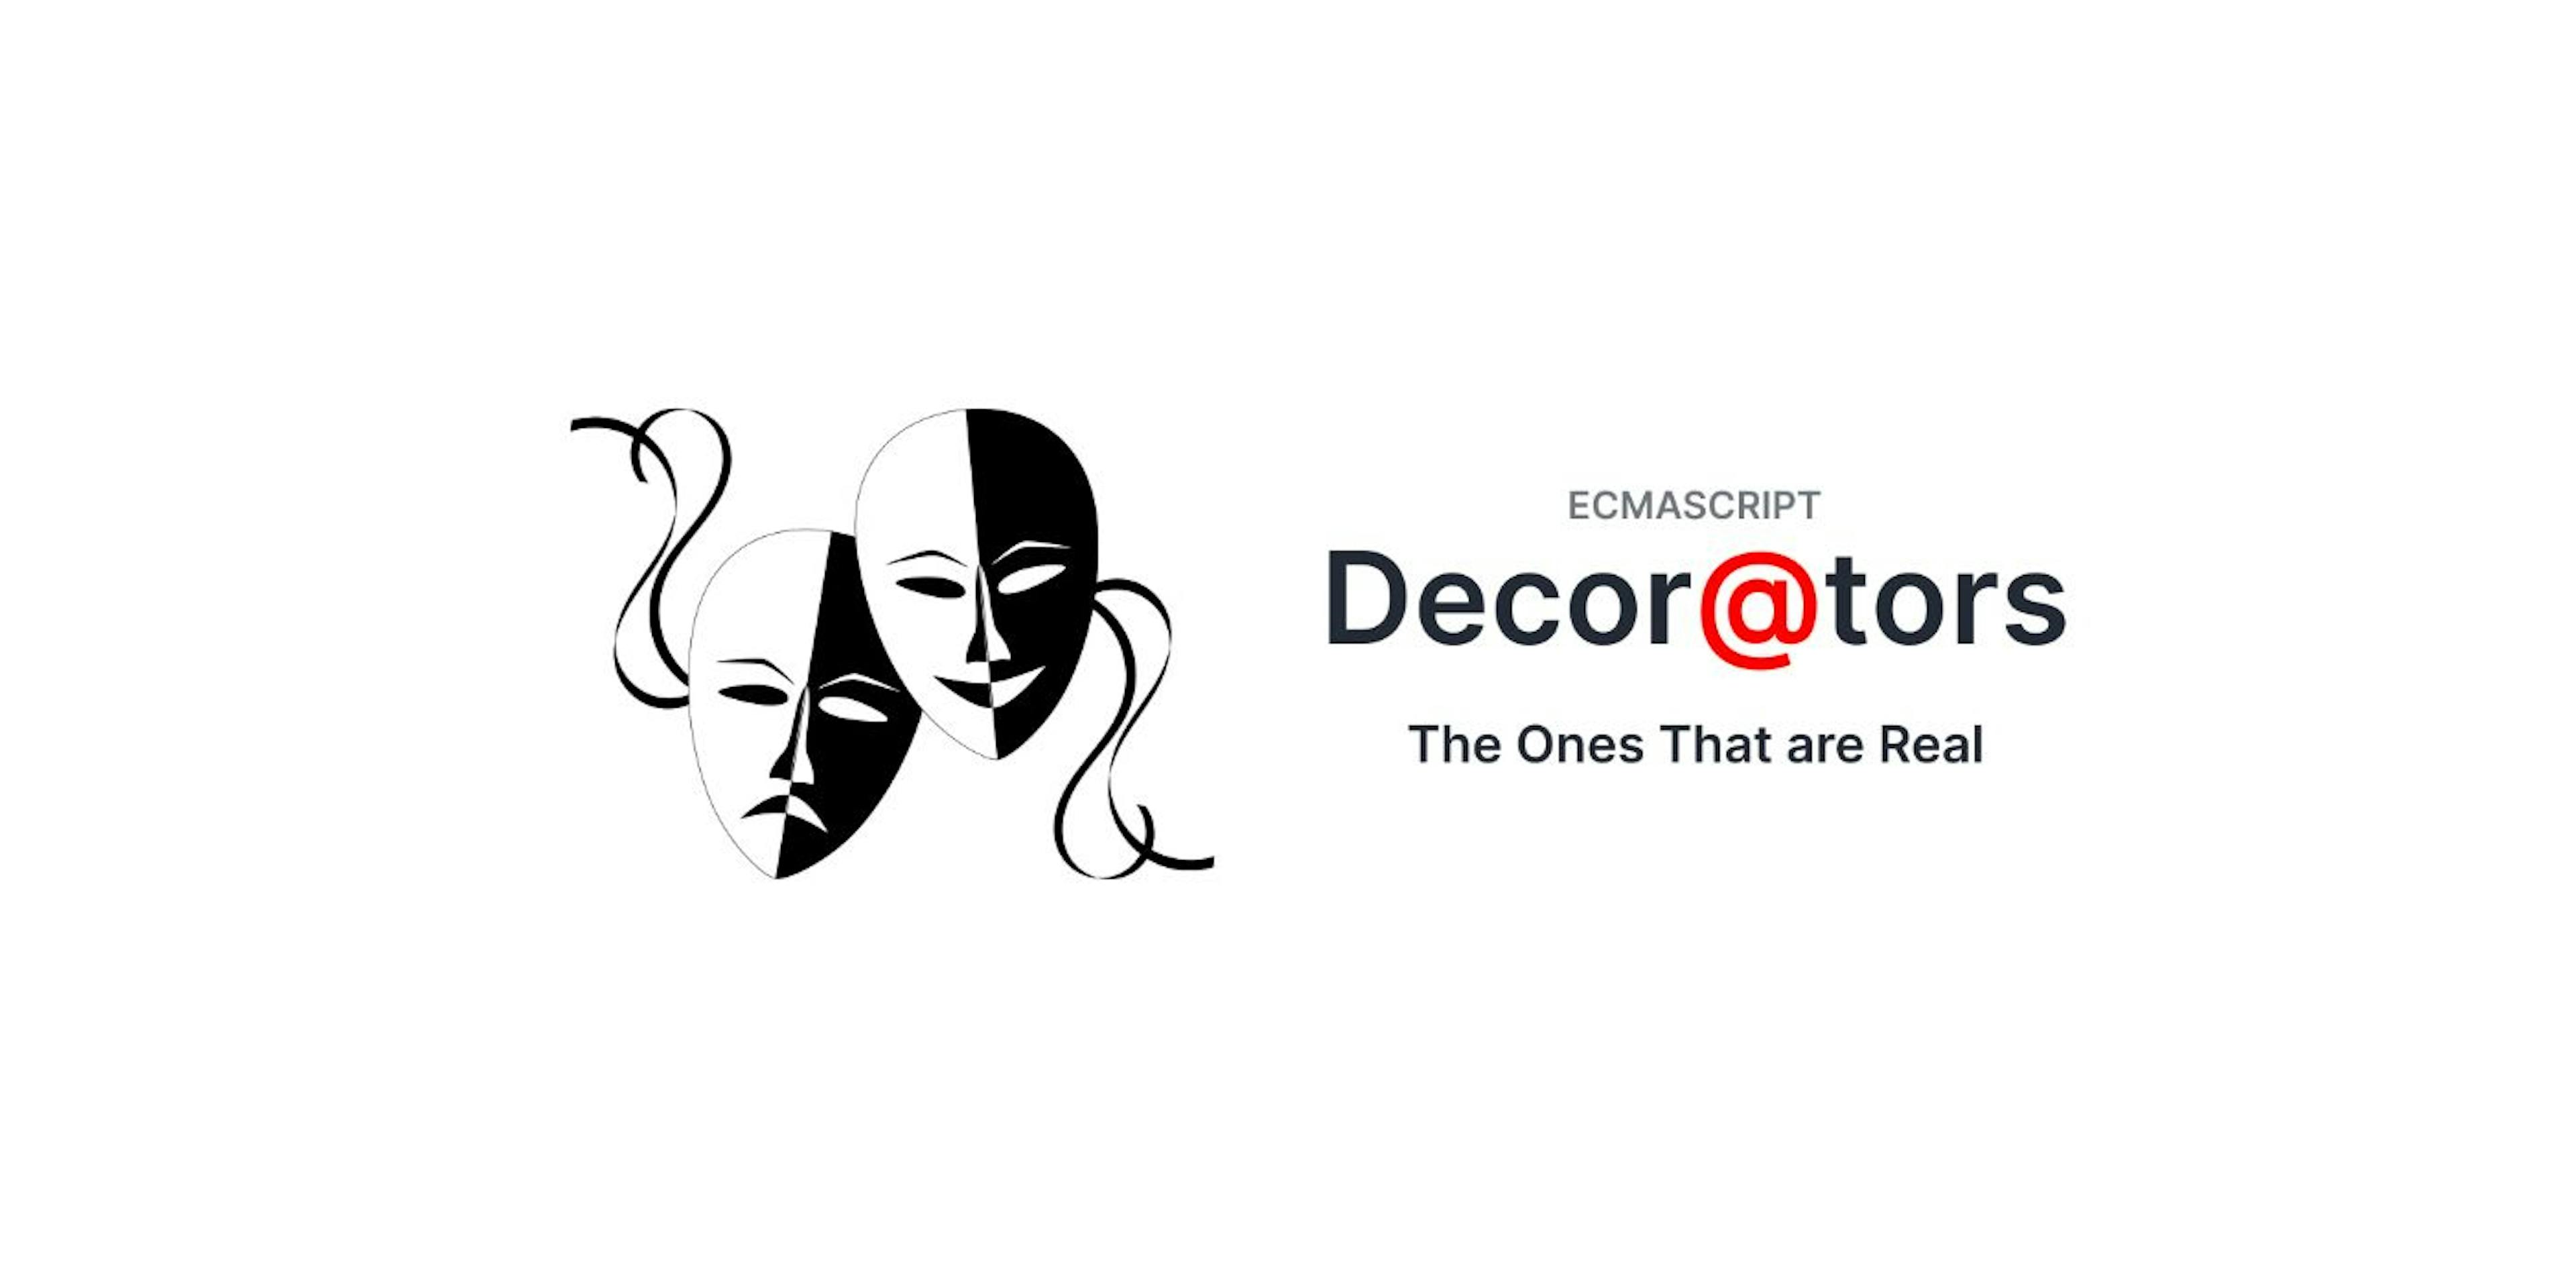 featured image - Don't Be Fooled: Spotting the Authentic ECMAScript Decorators